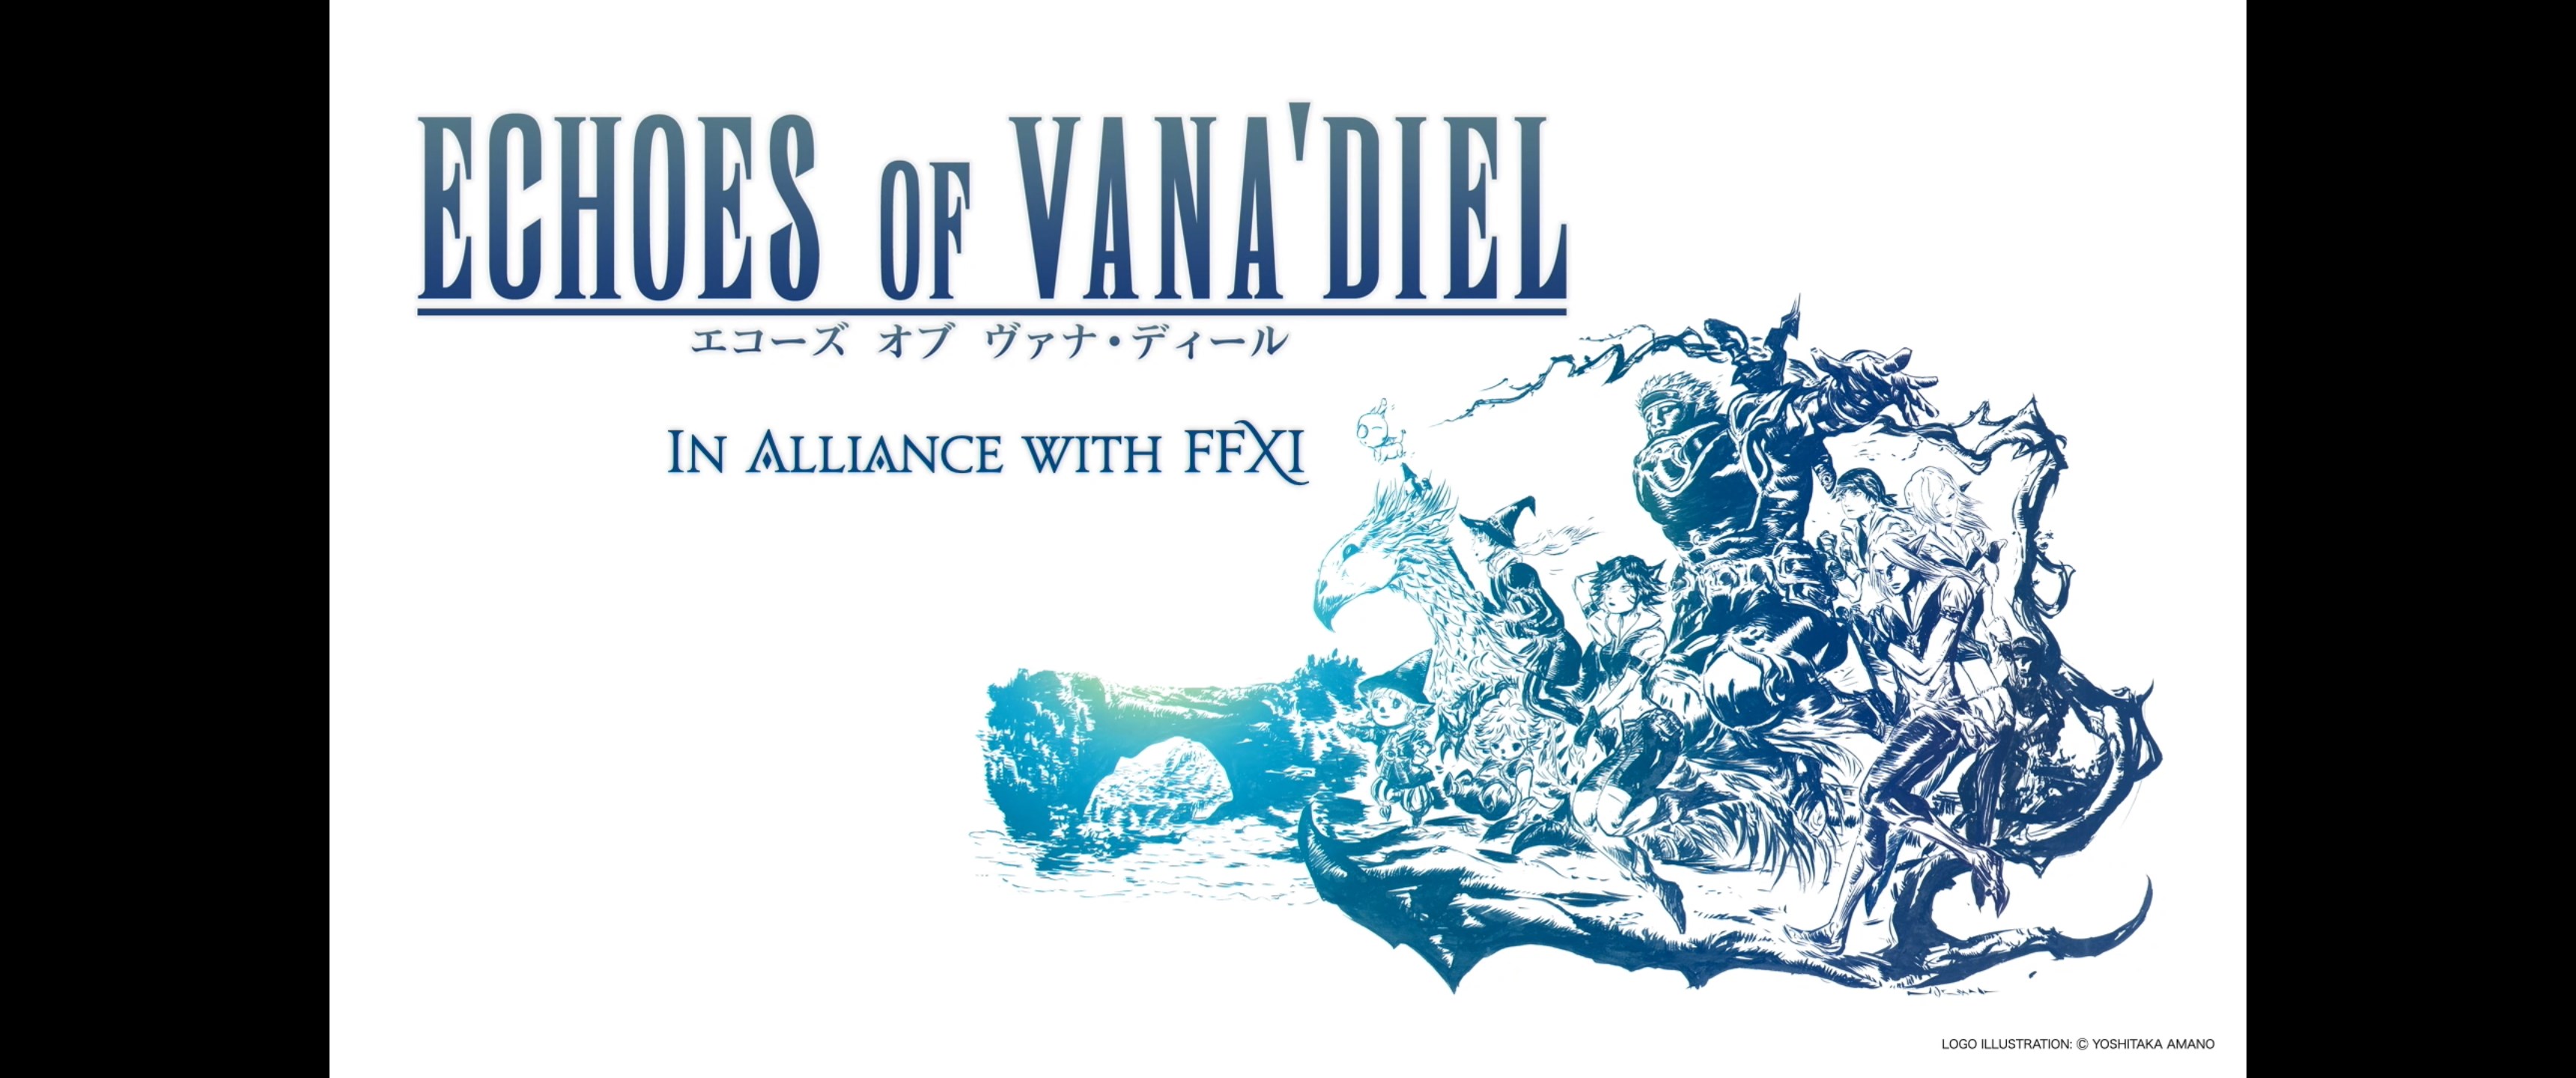 New Alliance Raid Echoes of Vanadiel FFXIV